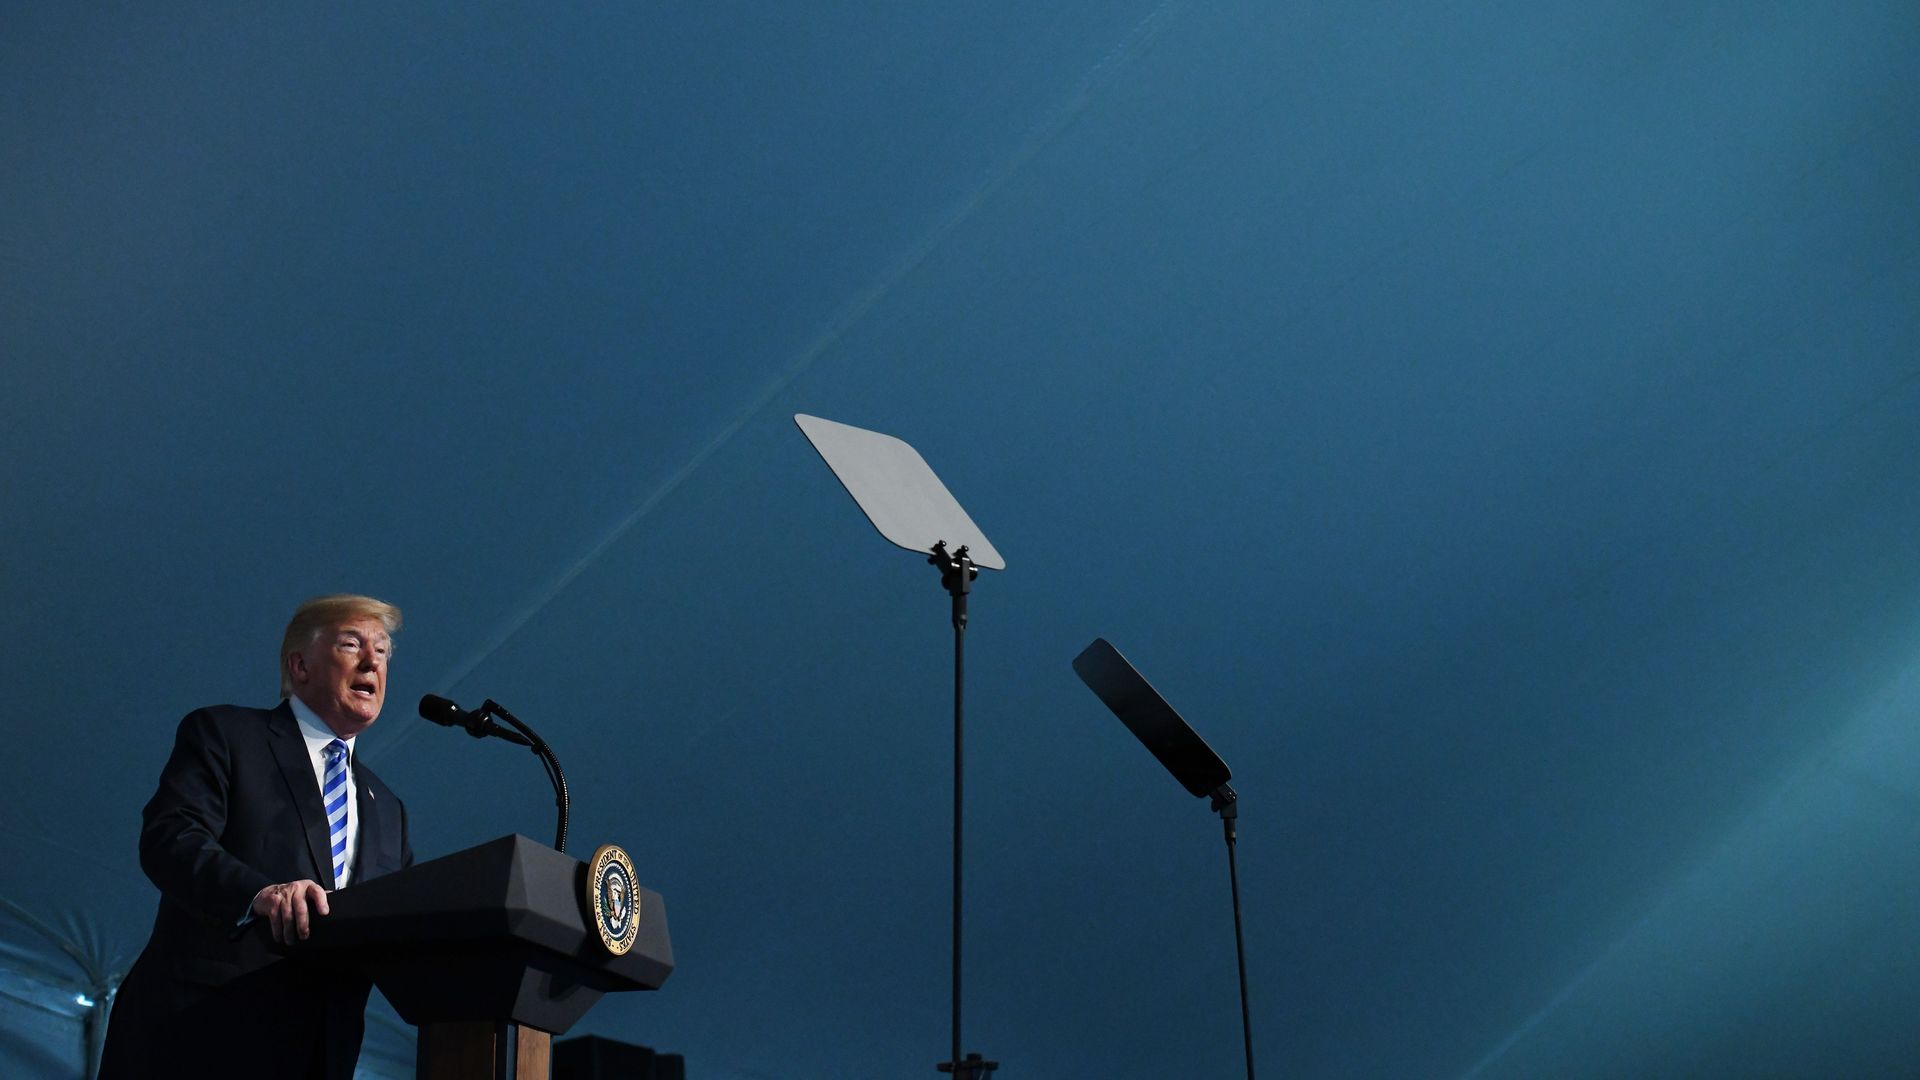 President Trump speaking at a podium.